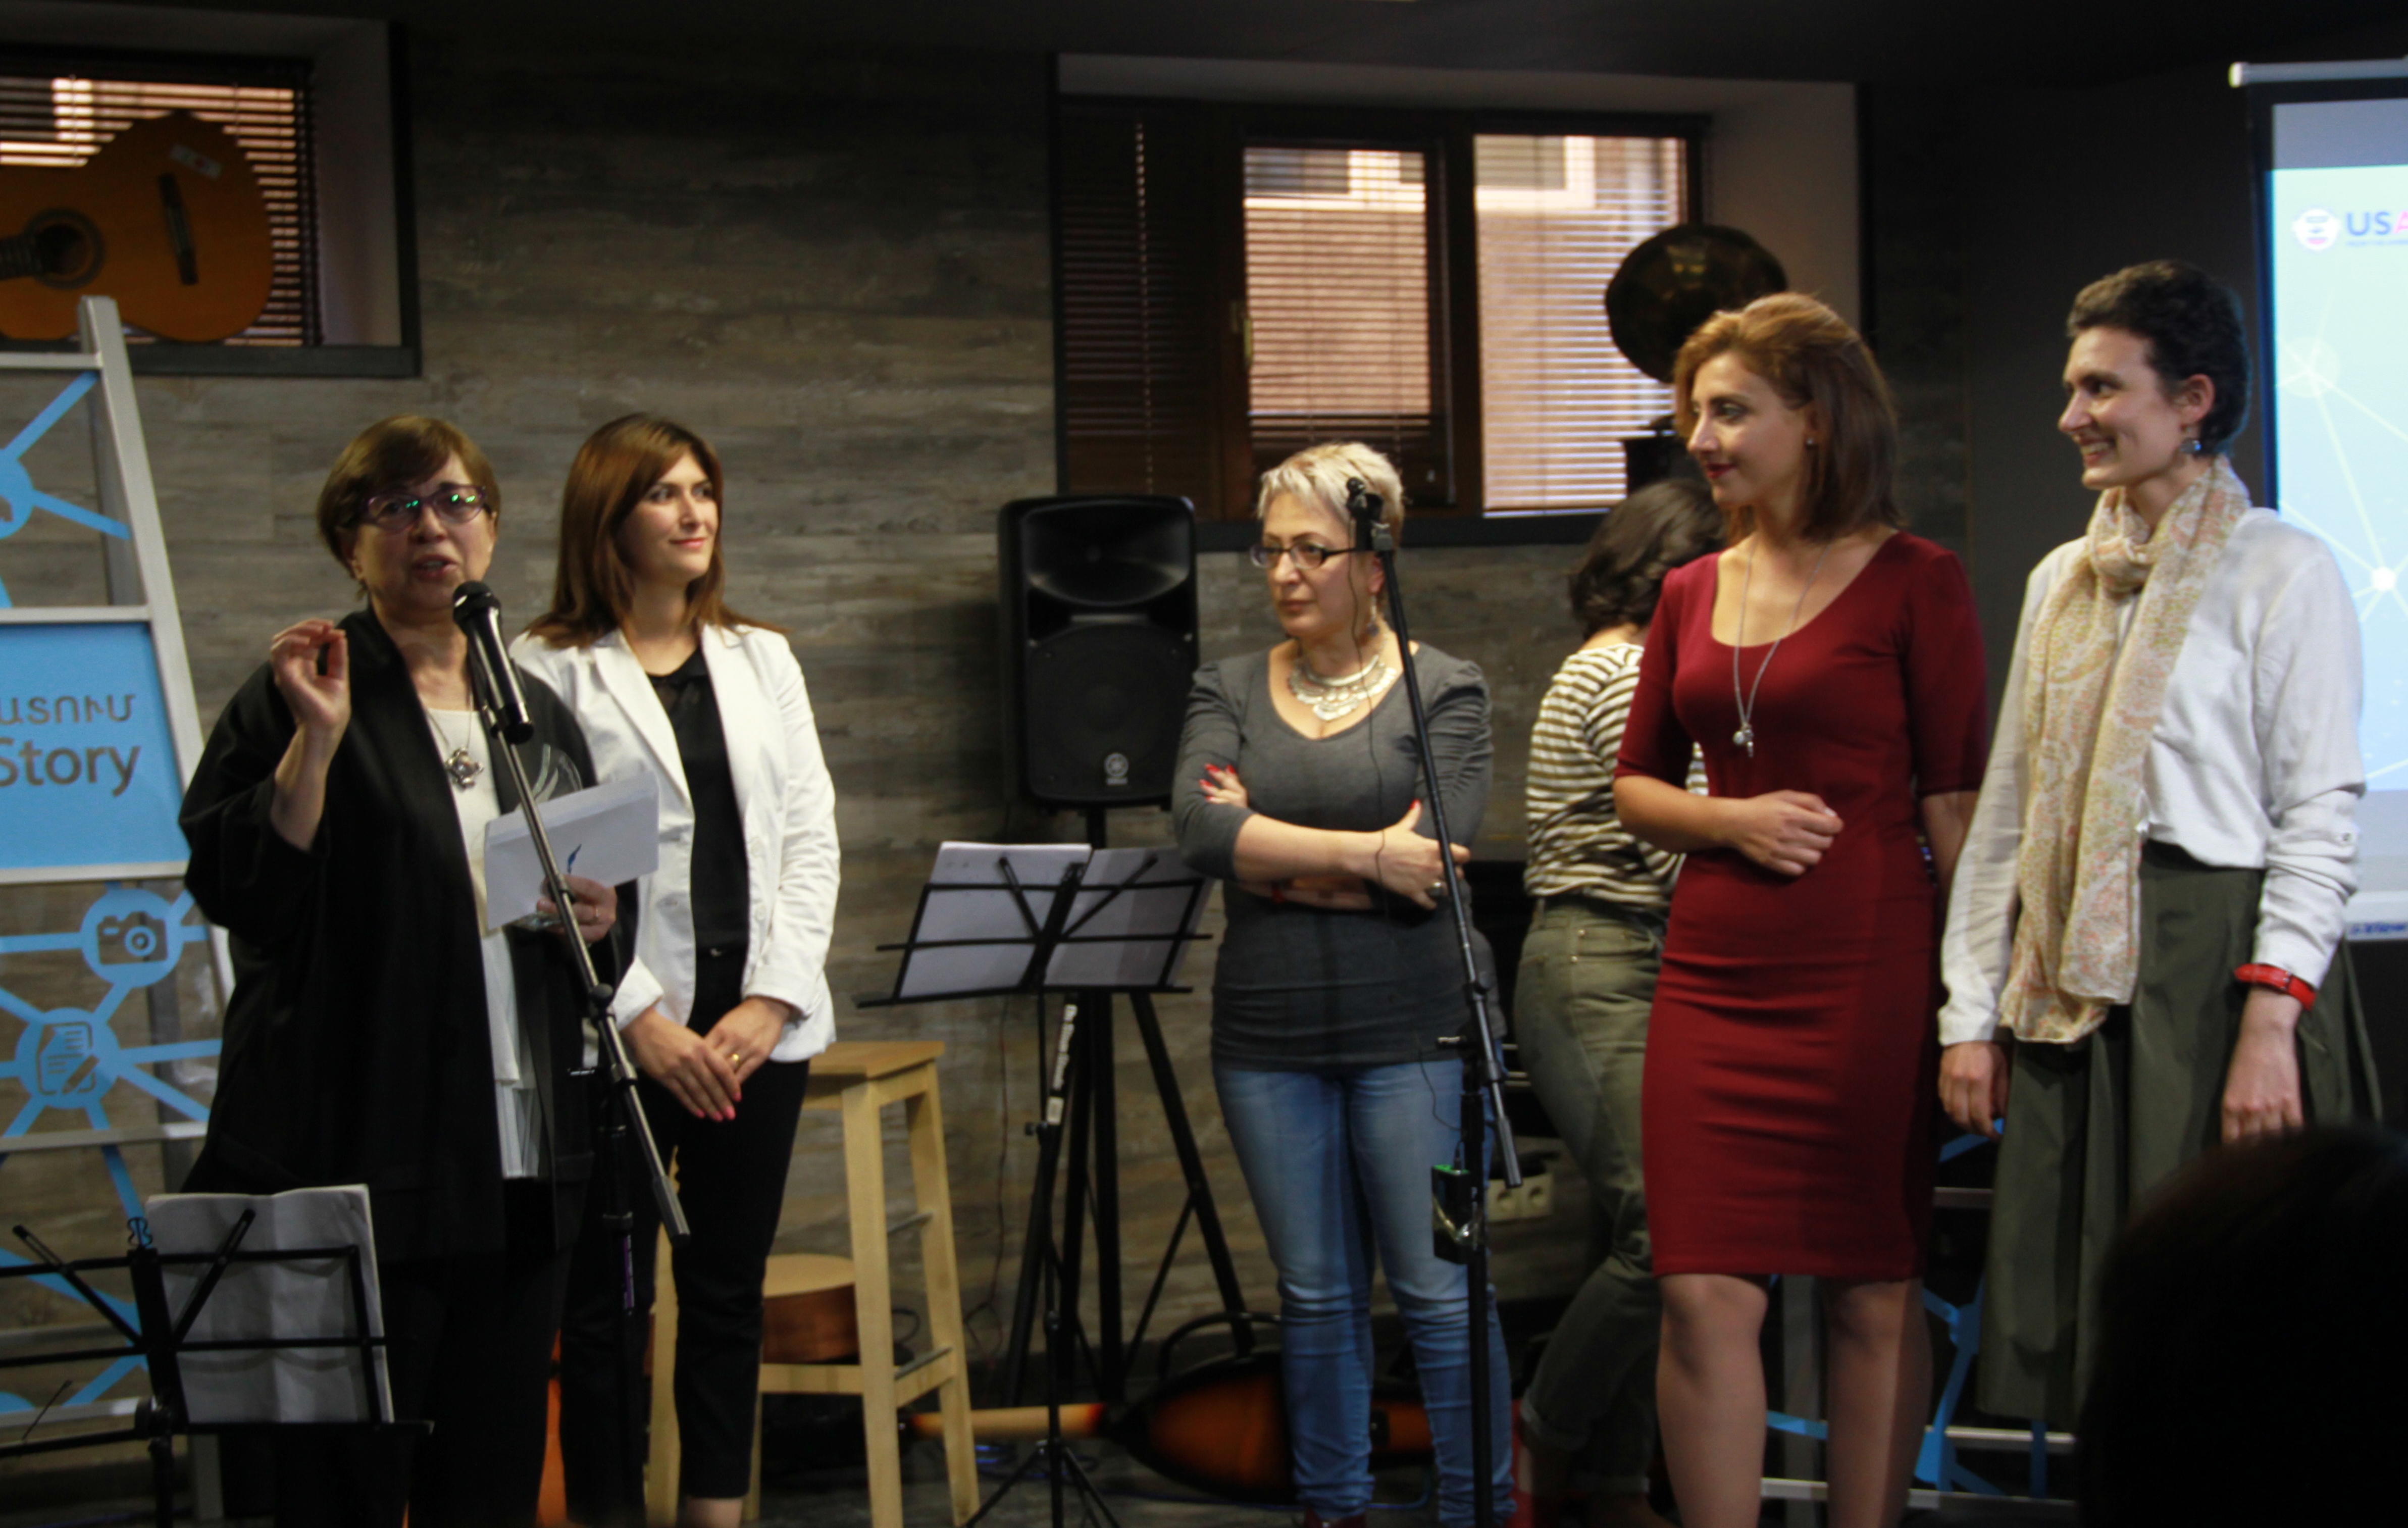 From left to right: Jury member Manan Aslamazyan, journalists Lala Ter-Ghazaryan, Yeranuhi Soghoyan, and Lilit Barseghyan, and the protagonist of her video Ani Haykuni.